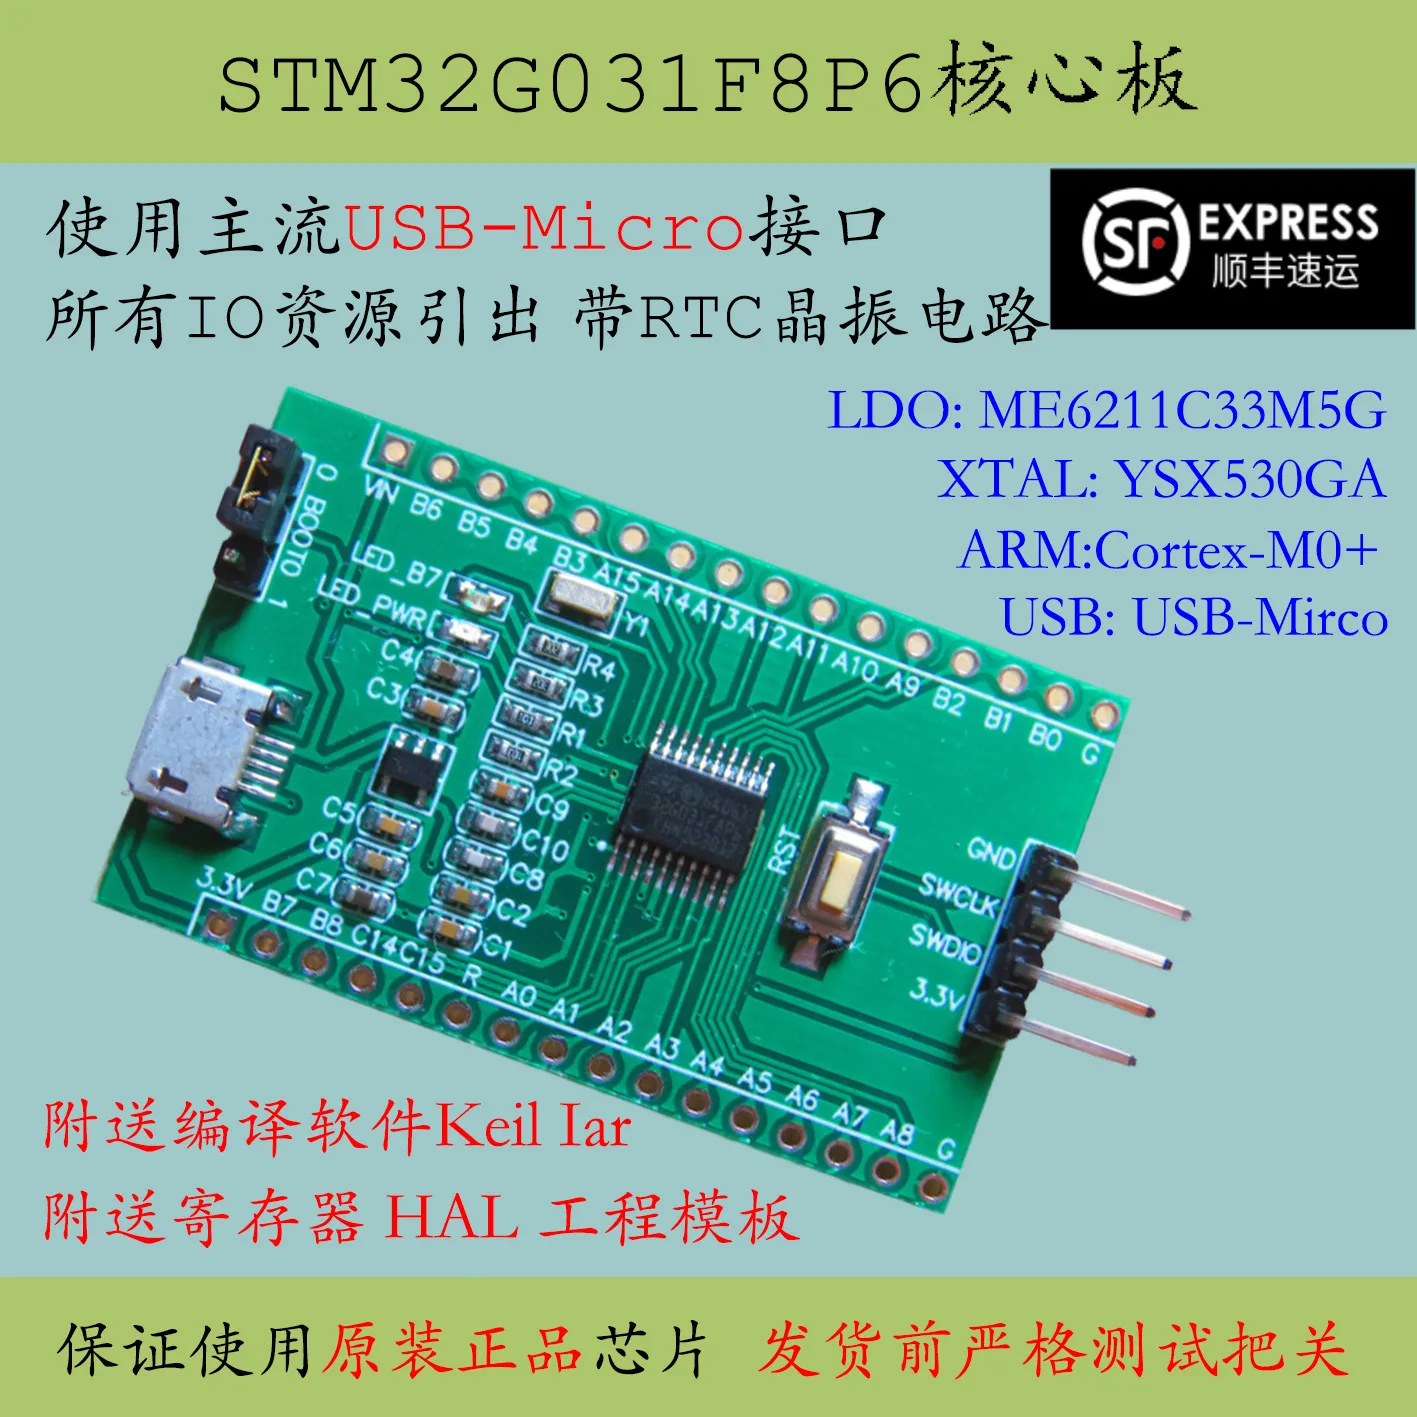 

Stm32g031 core board stm32g031f8p6 minimum system Cortex-M0 + new product G0 development board